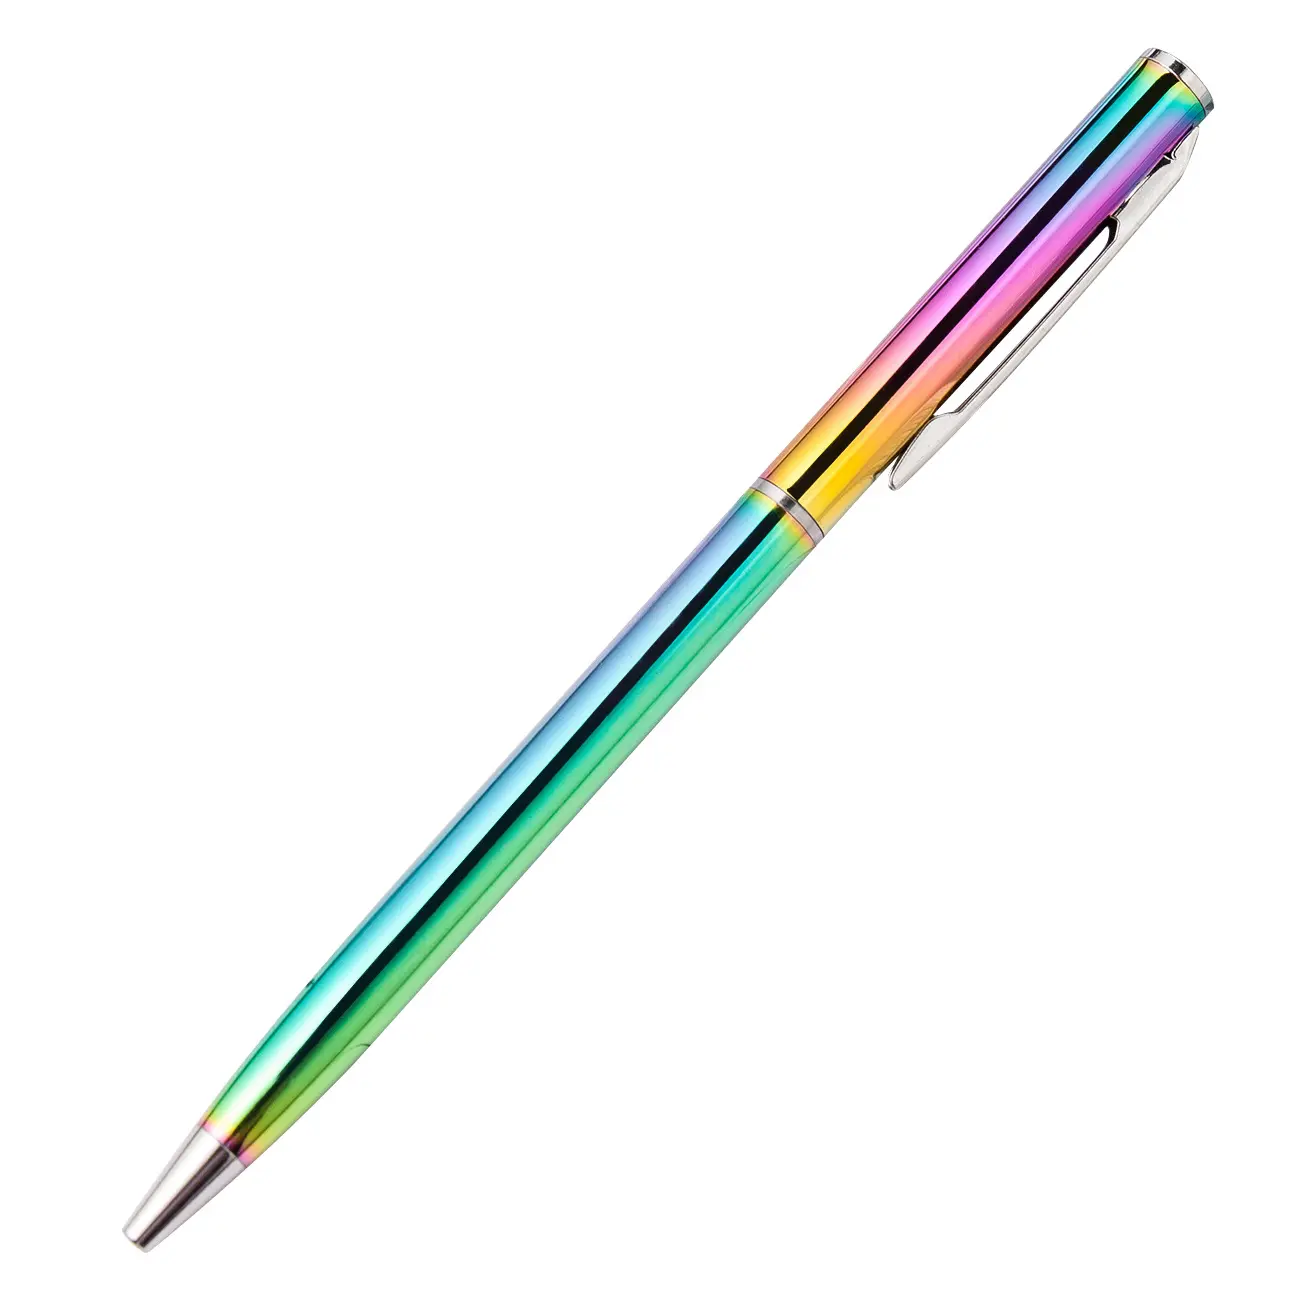 Metallic customize pens office pen with logo smooth writing stylus pen